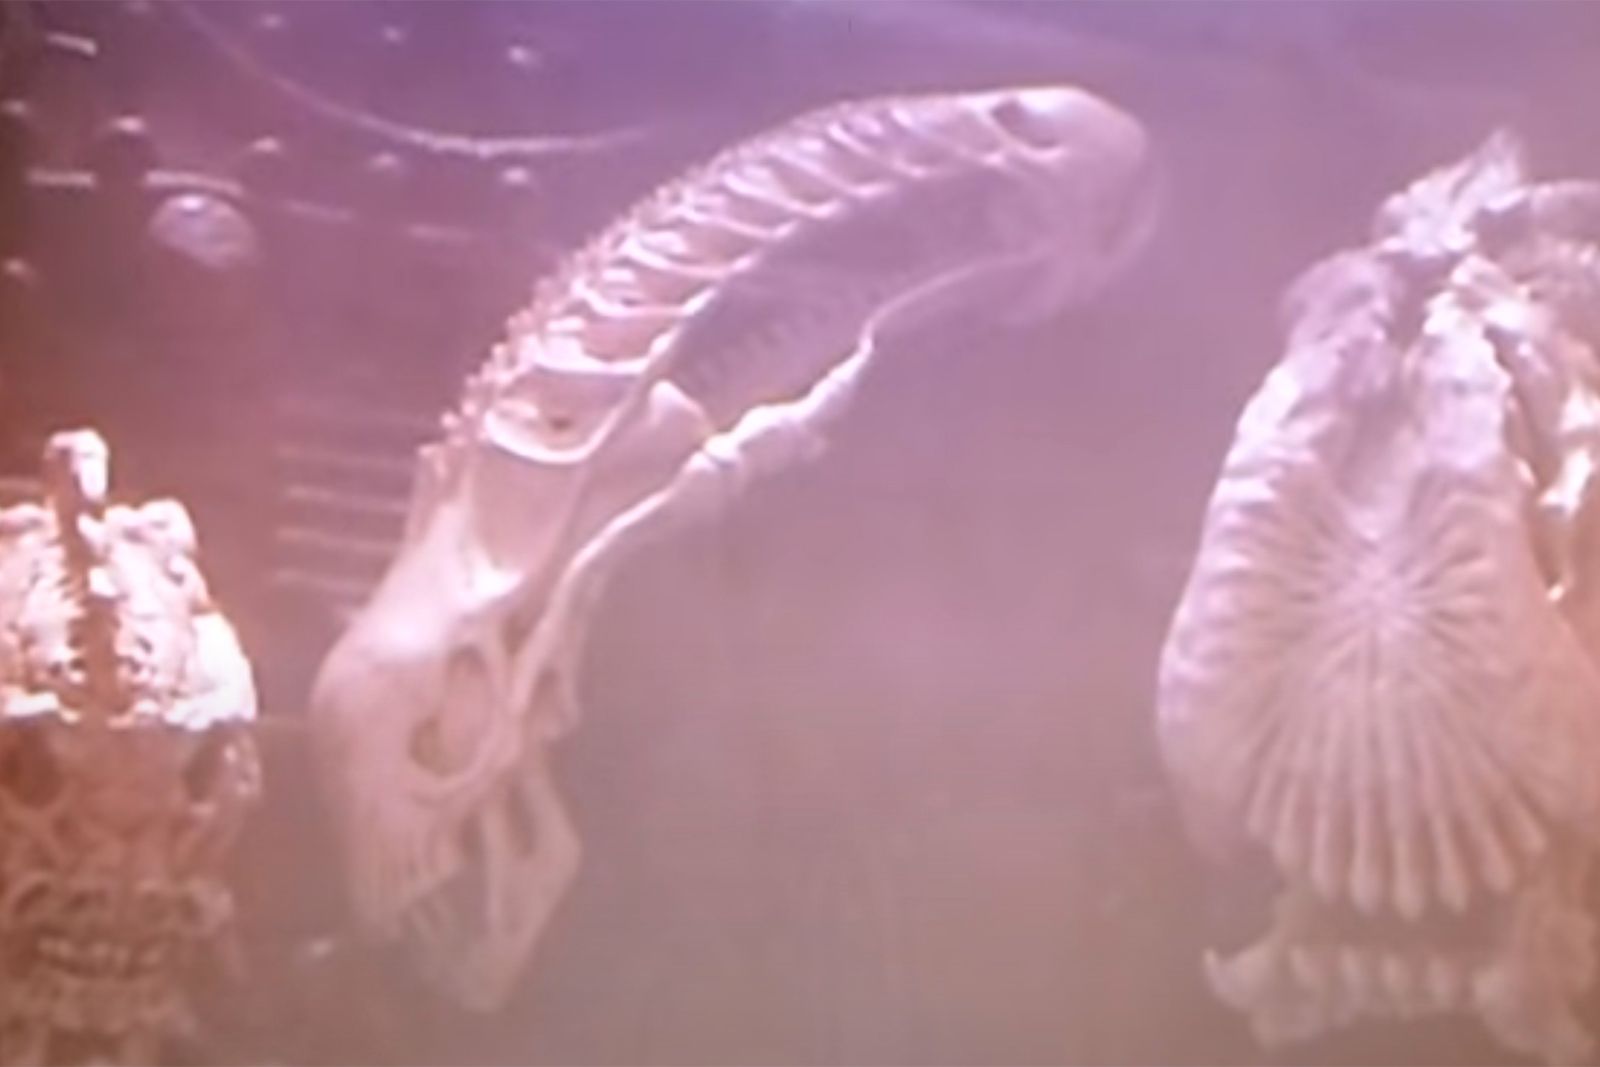 AVP3 Aliens vs. Predators Movie Release Date by josuethegreat on